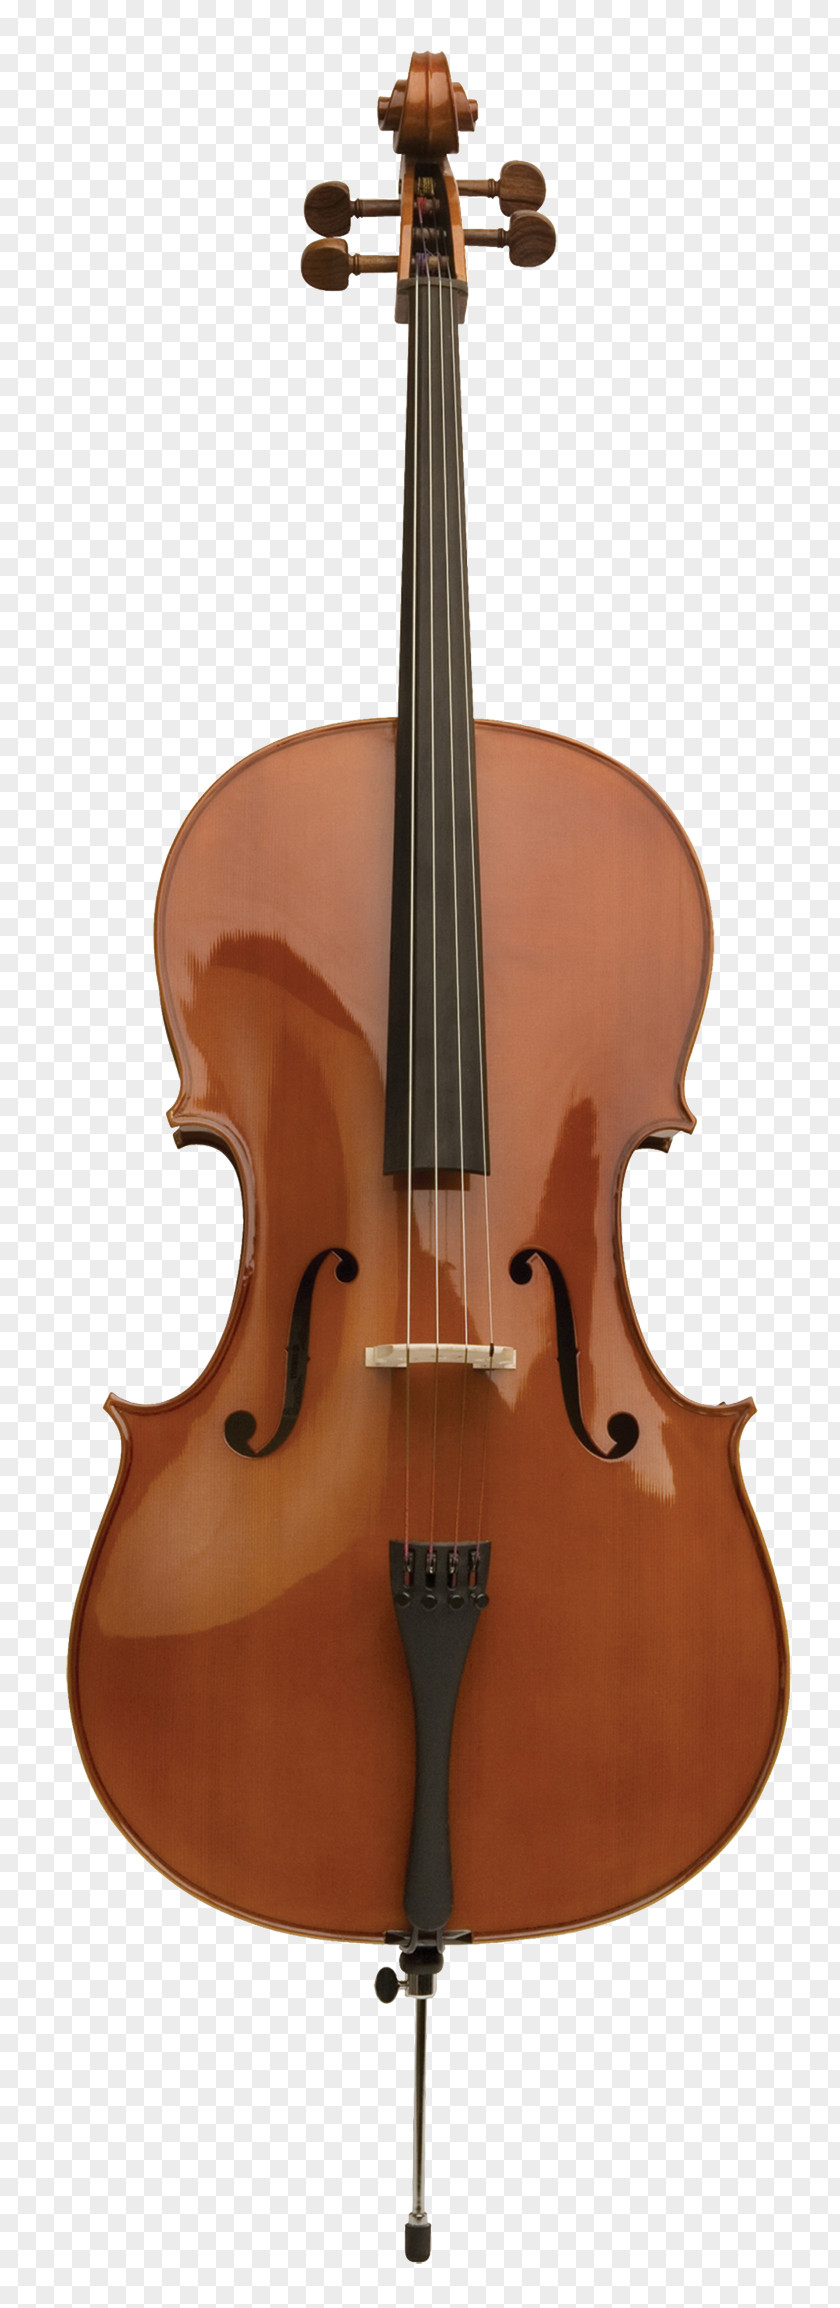 Violin Five String Instruments The Strad Fingerboard PNG